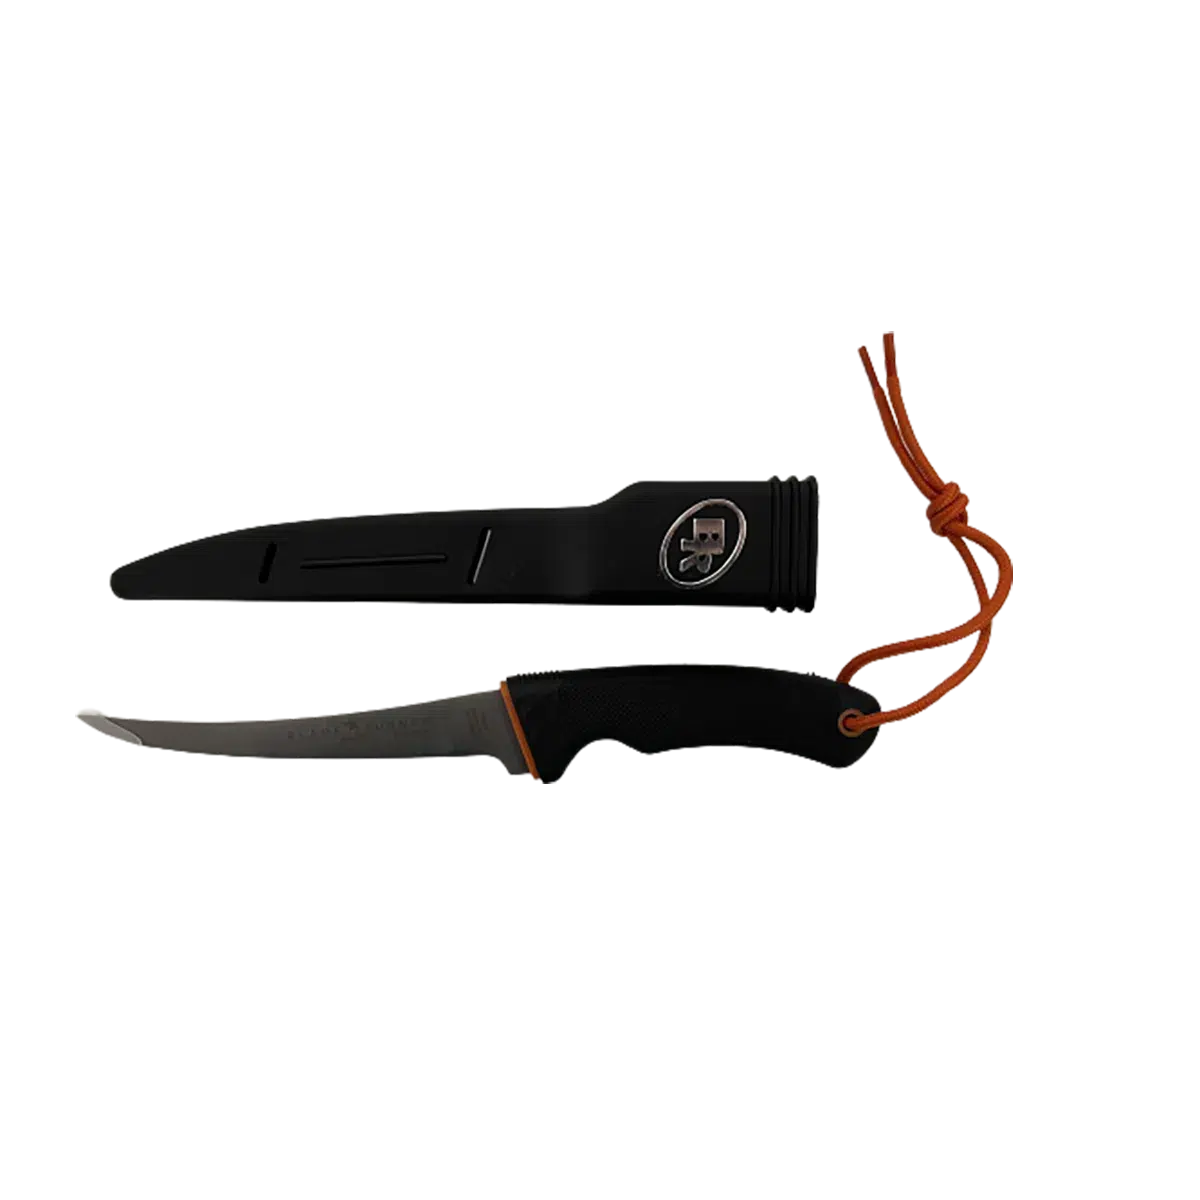 Blade Runner 16cm Fillet Knife KBRSCL16-Tools - Knives-Blade Runner-Fishing Station